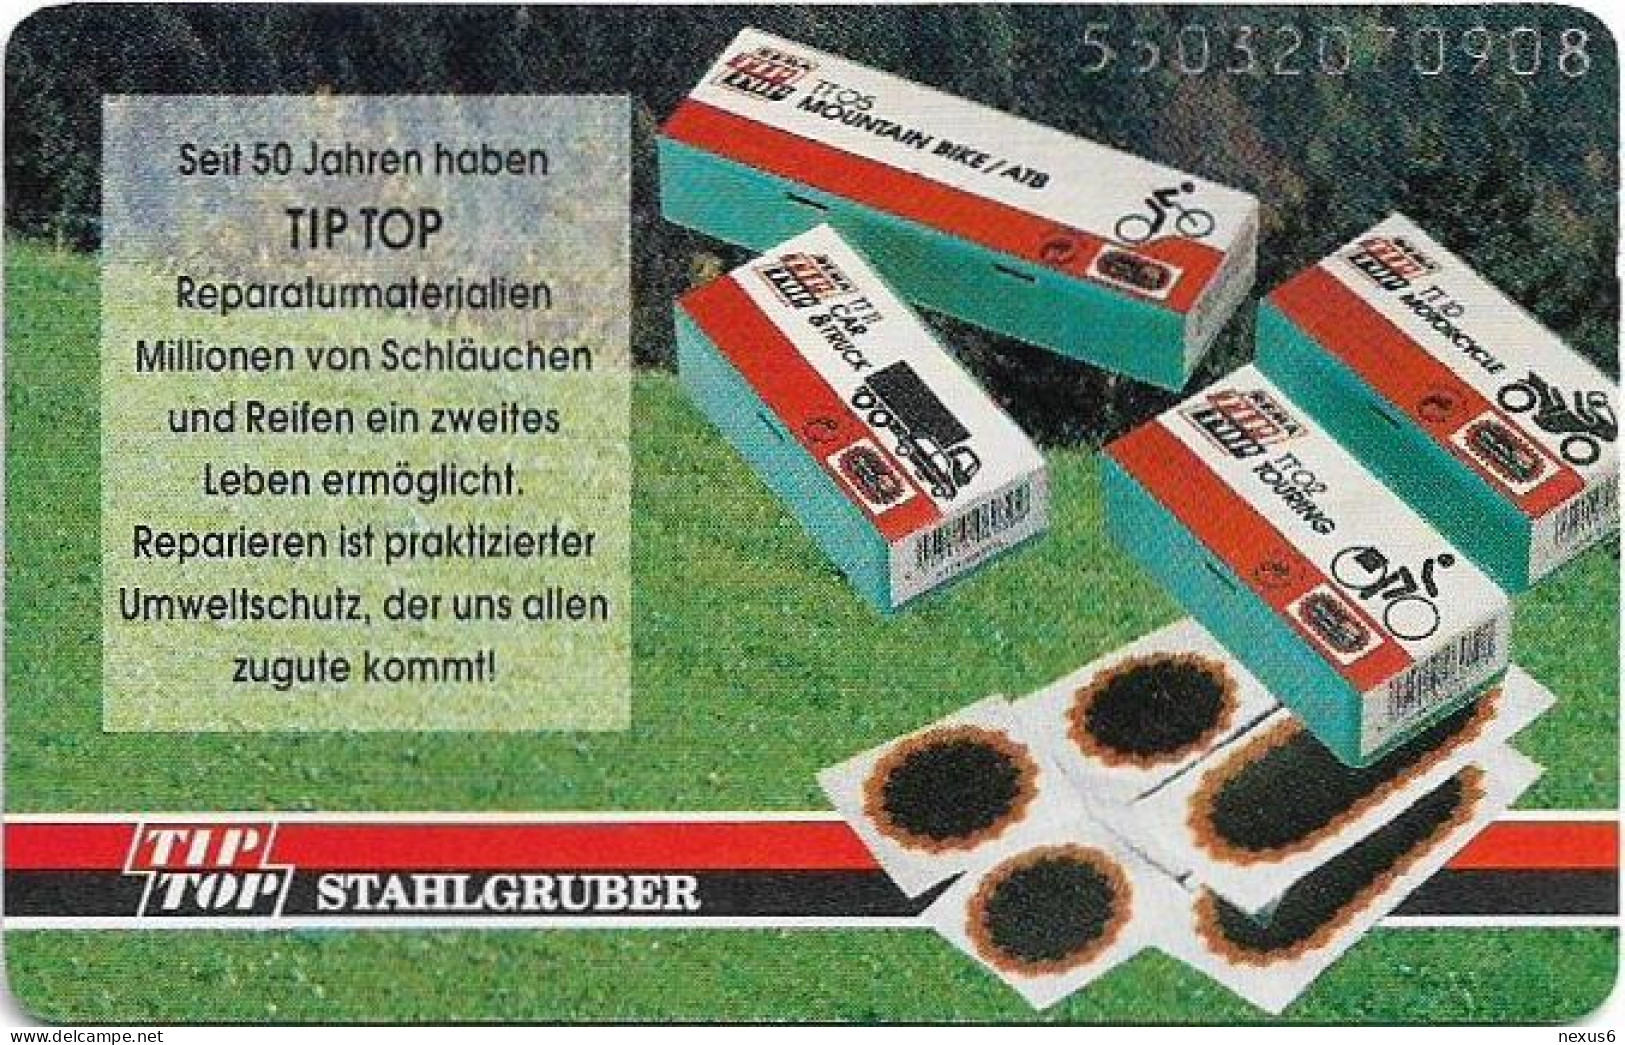 Germany - Tip Top Stahlgruber - O 0437 - 03.1995, 6DM, 5.000ex, Mint - O-Series: Kundenserie Vom Sammlerservice Ausgeschlossen